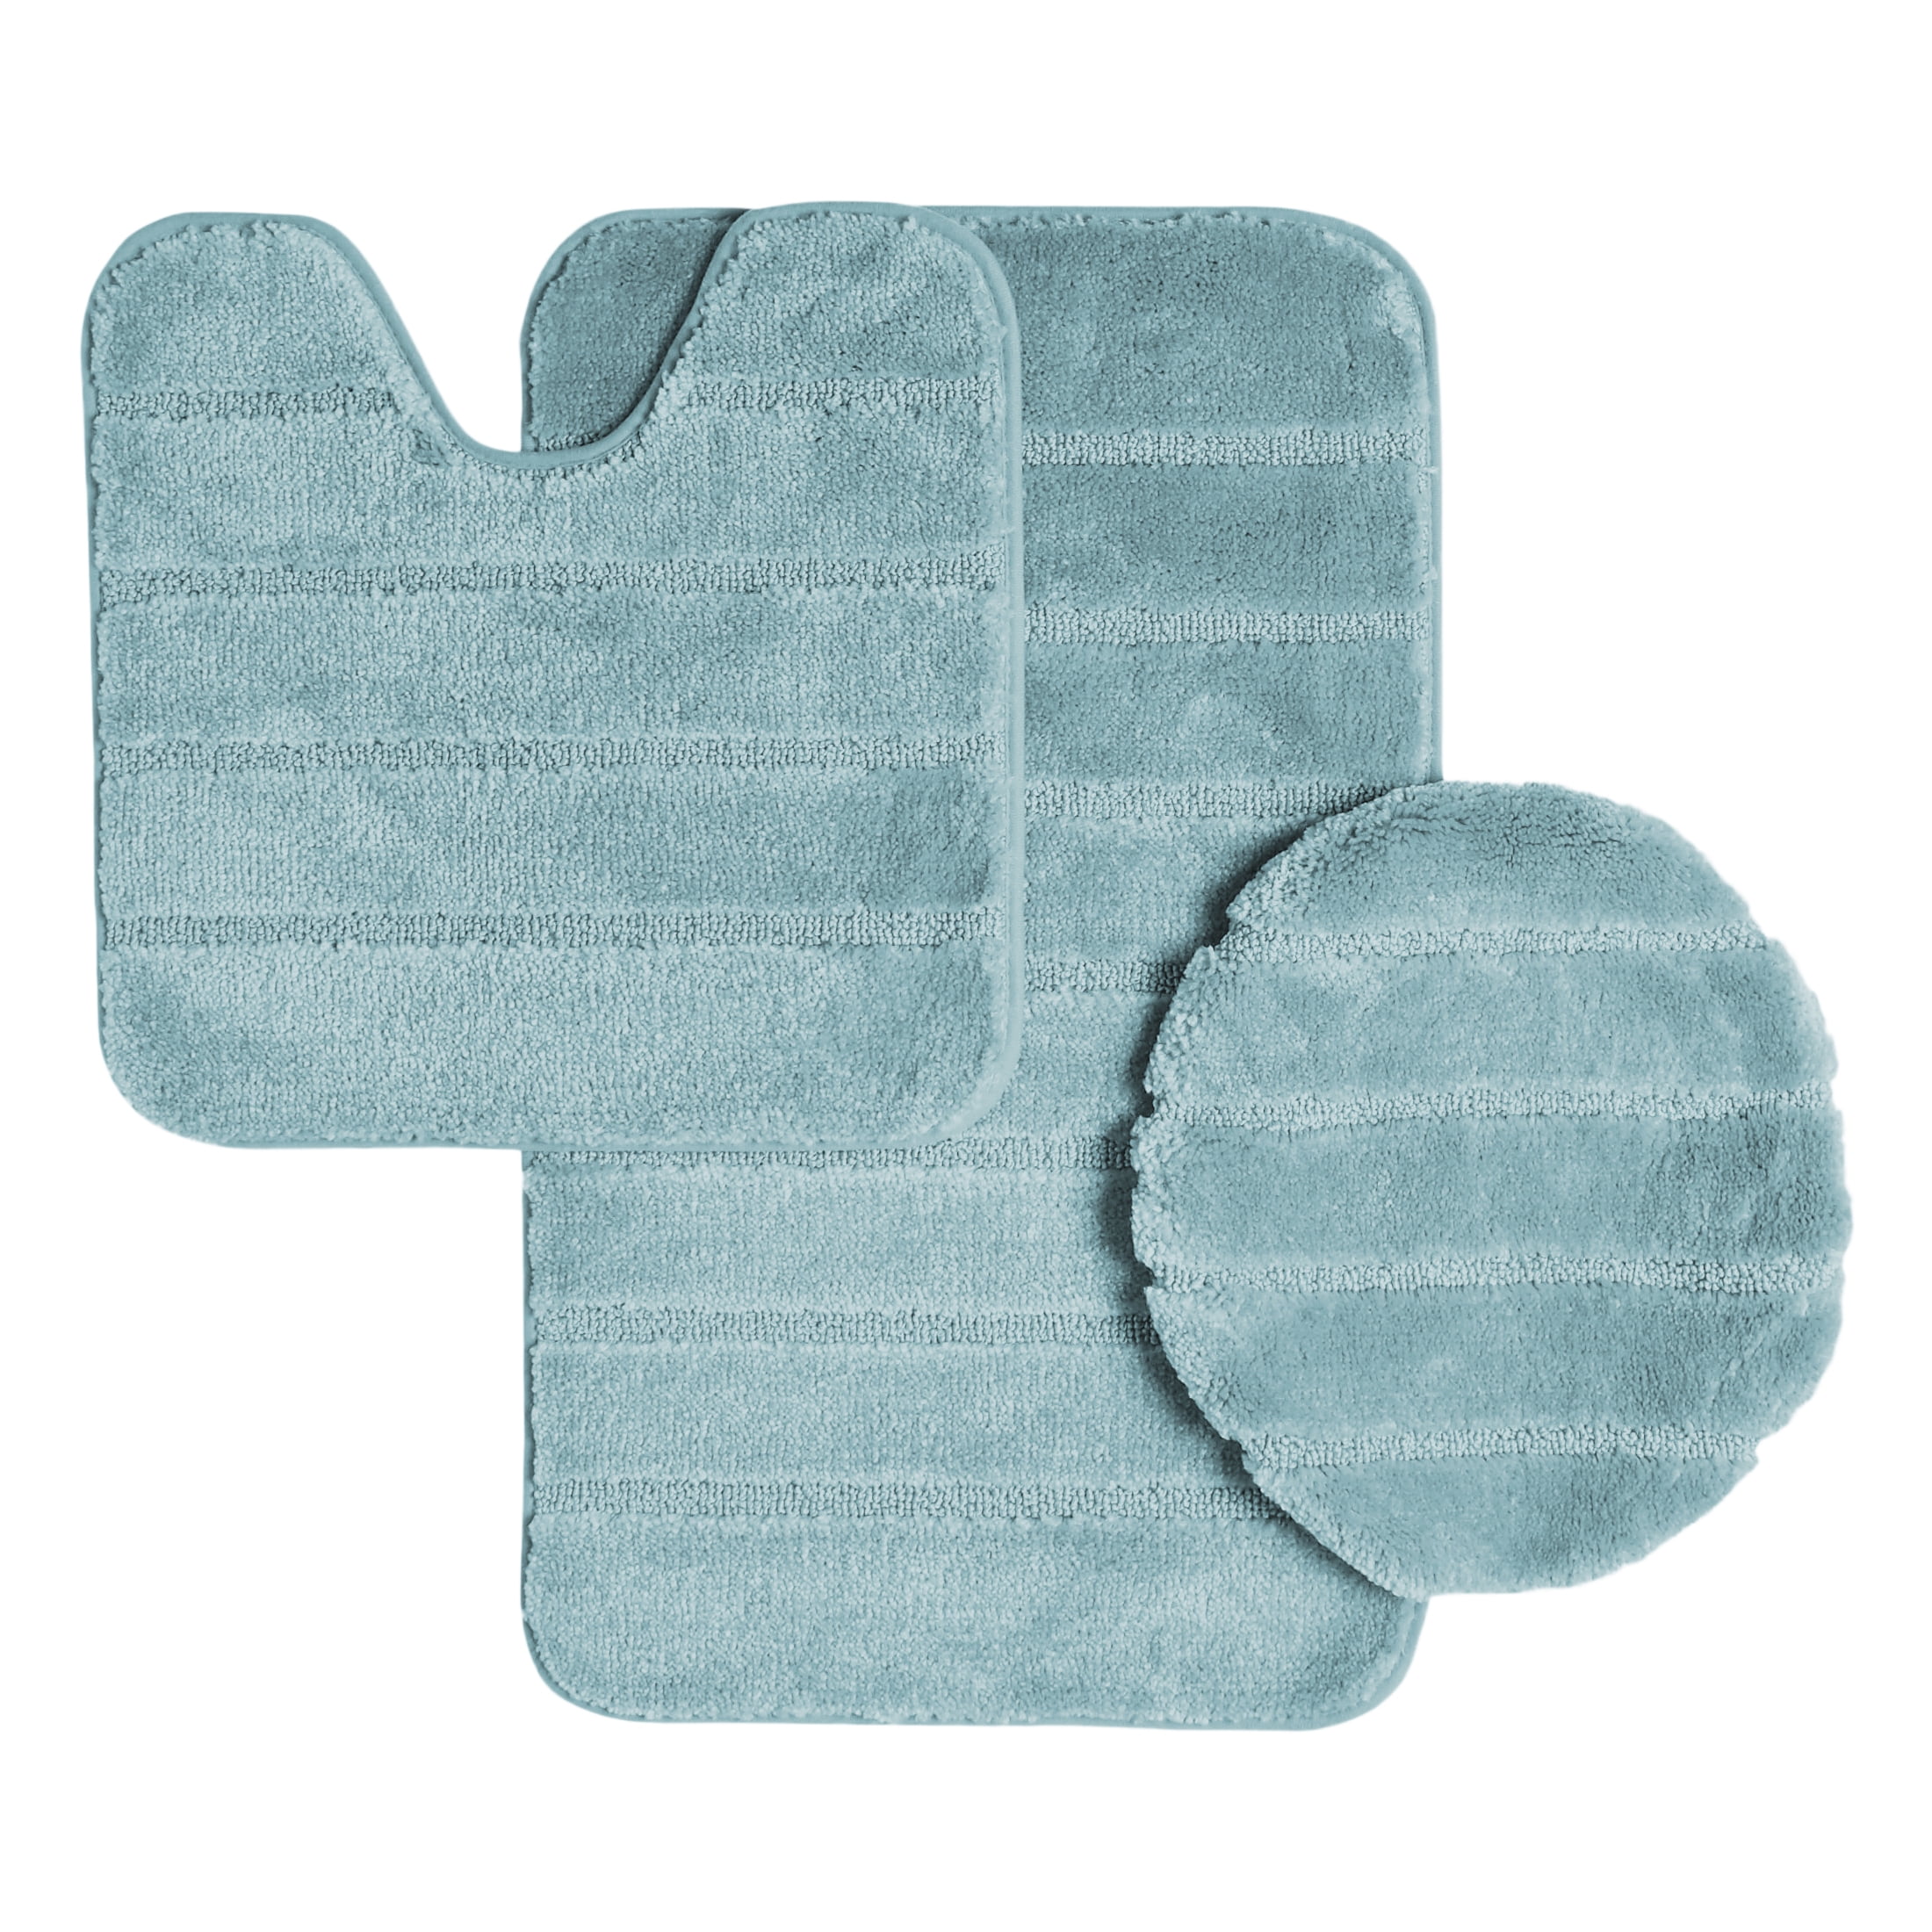 Ribbed Design Soft Pile Solid Color 3, Contemporary Bathroom Rug Sets